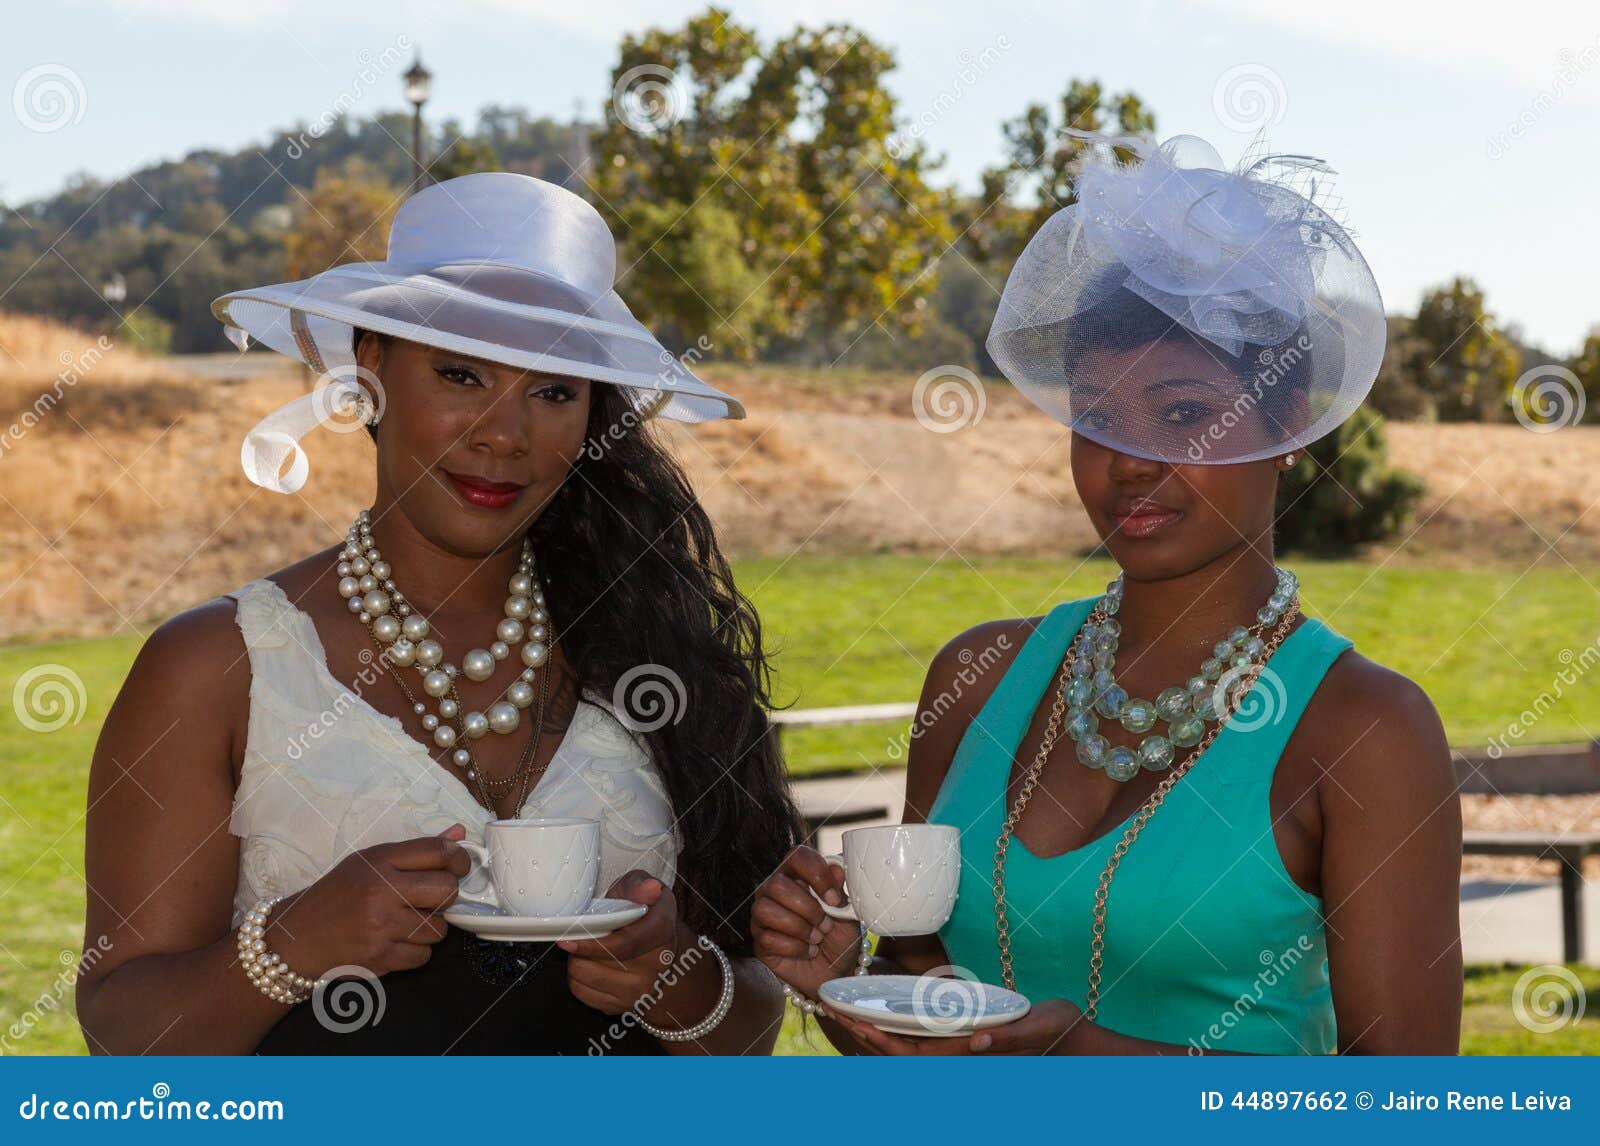 Buy > women's tea party attire > in stock